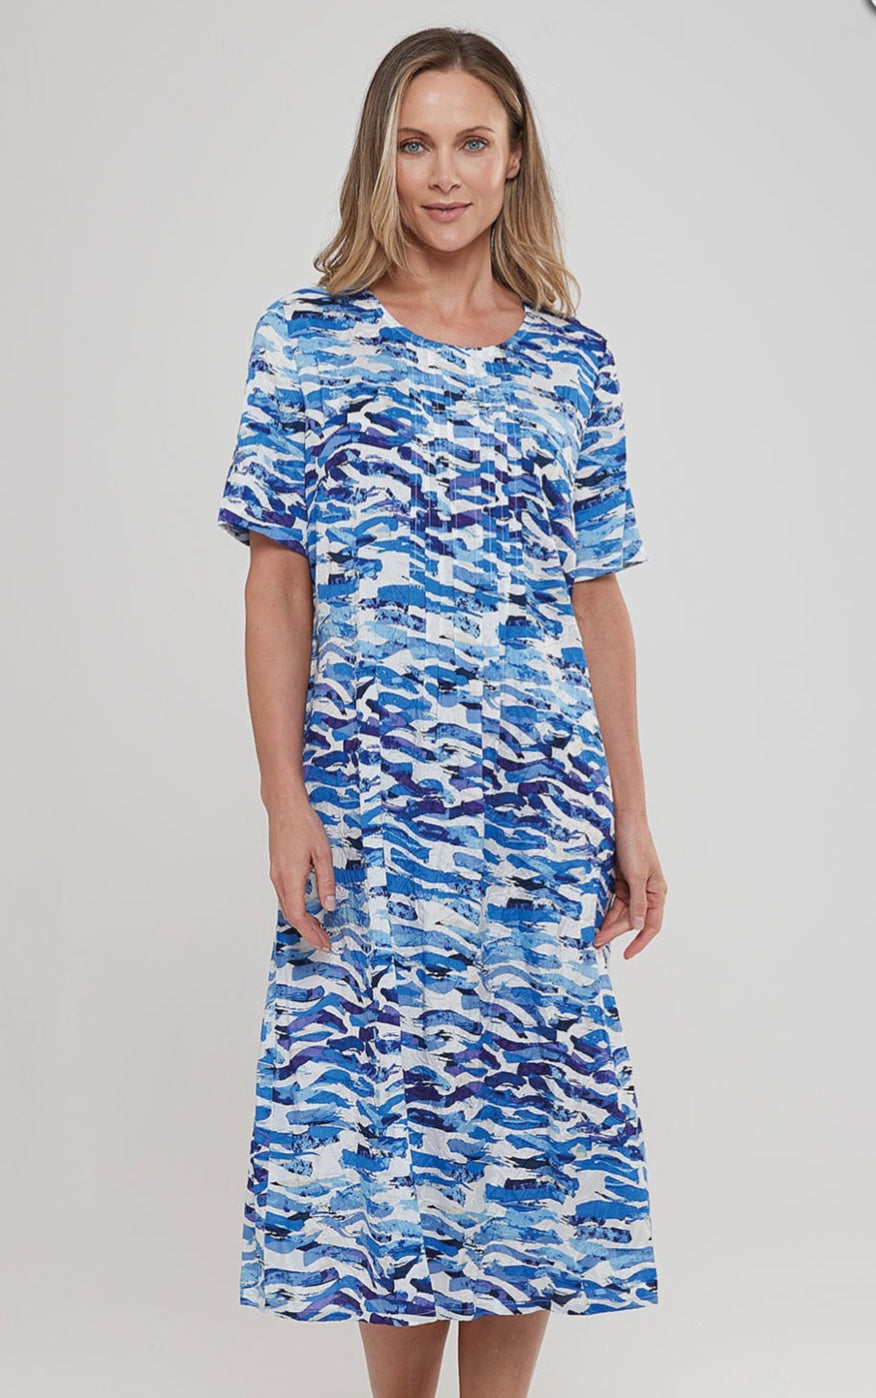 Ocean Print Shannon Dress - Blue Mix